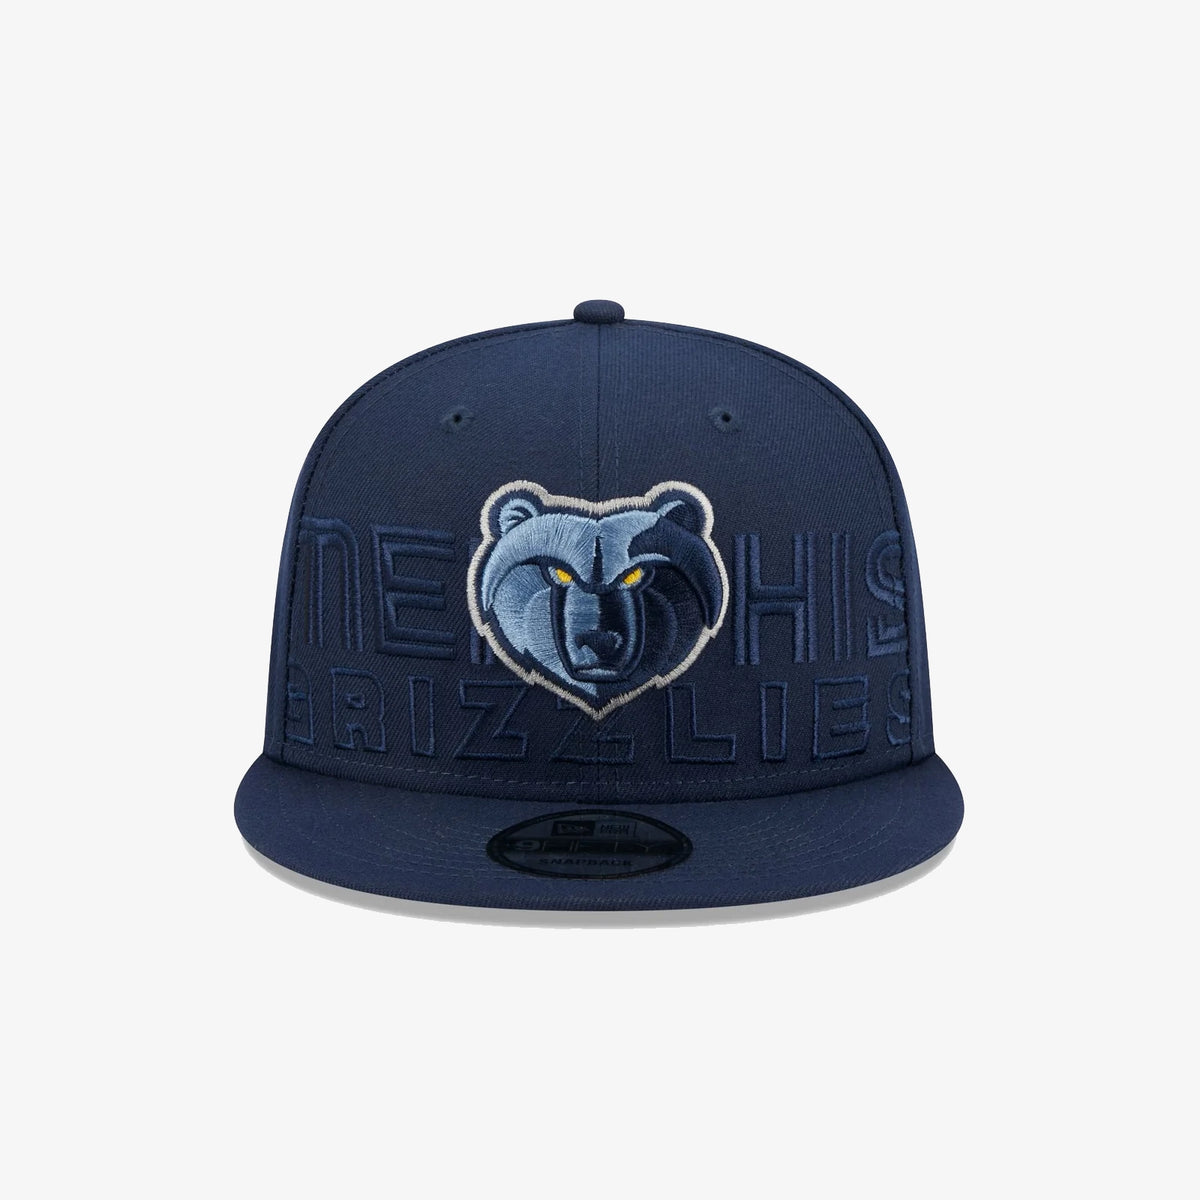 New Era Kids NBA Memphis Grizzlies 9FIFTY Snapback Hat